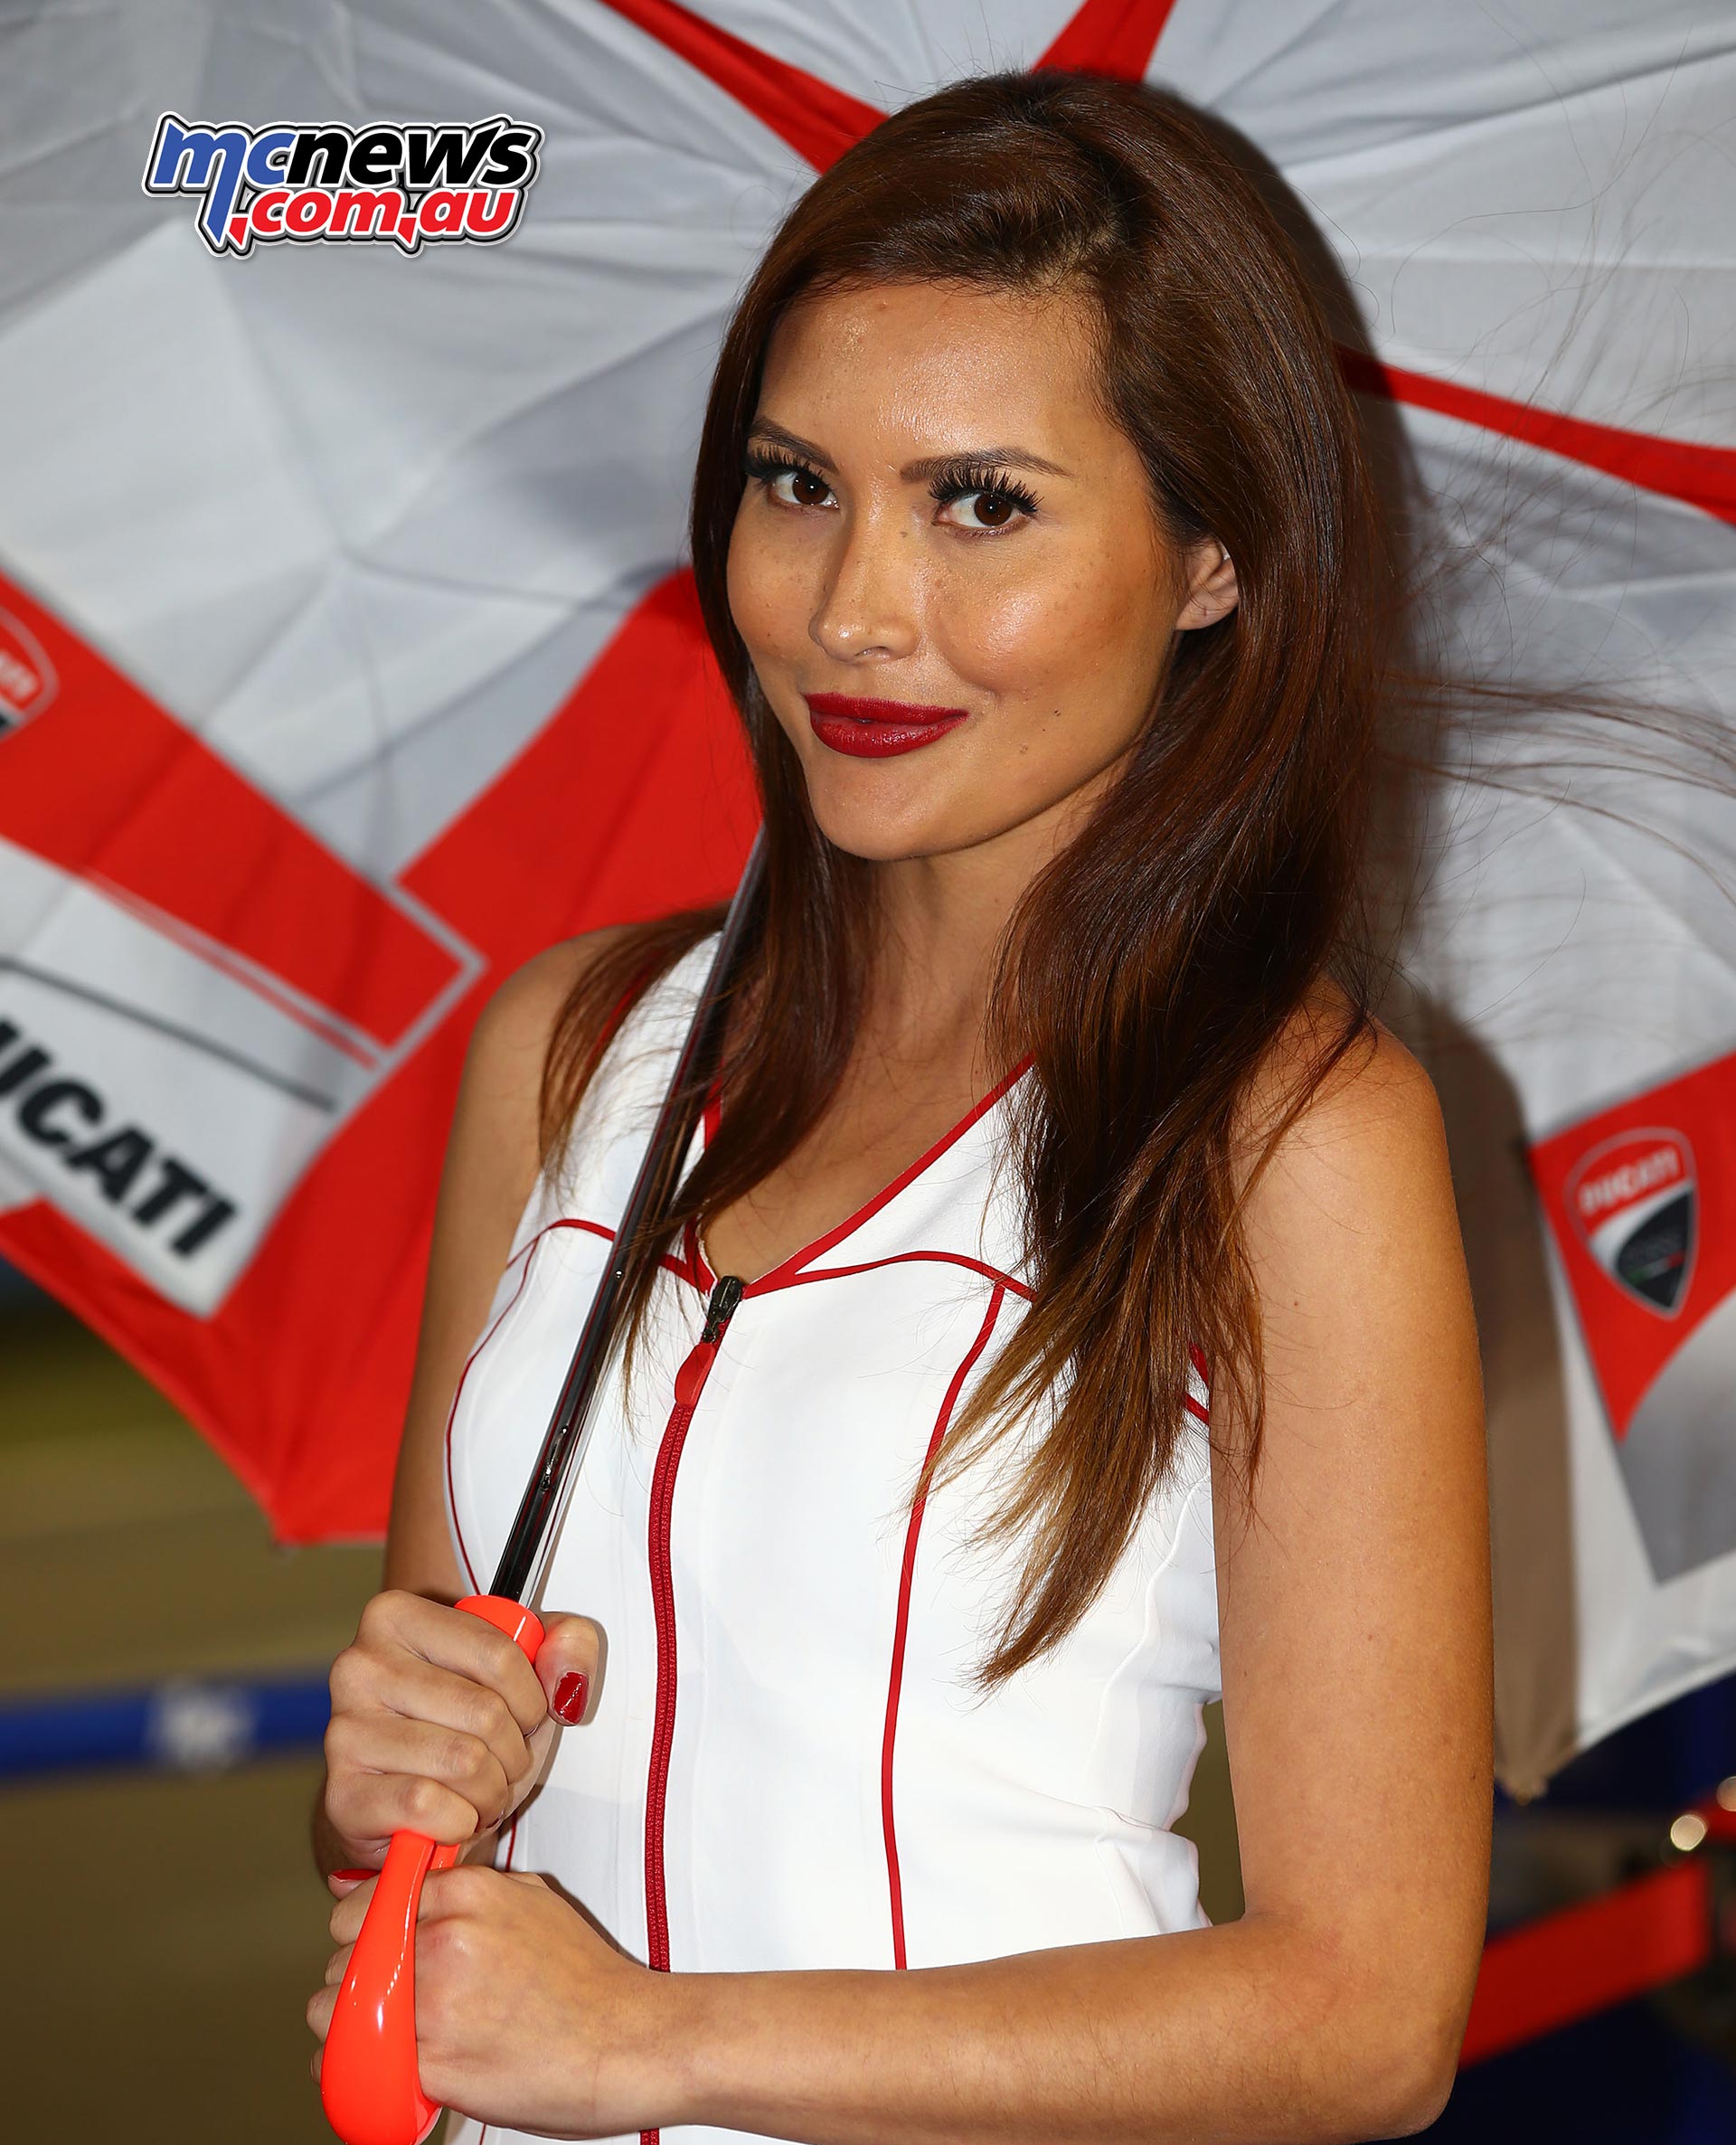 MotoGP grid girl pictures Qatar 2013 | Visordown